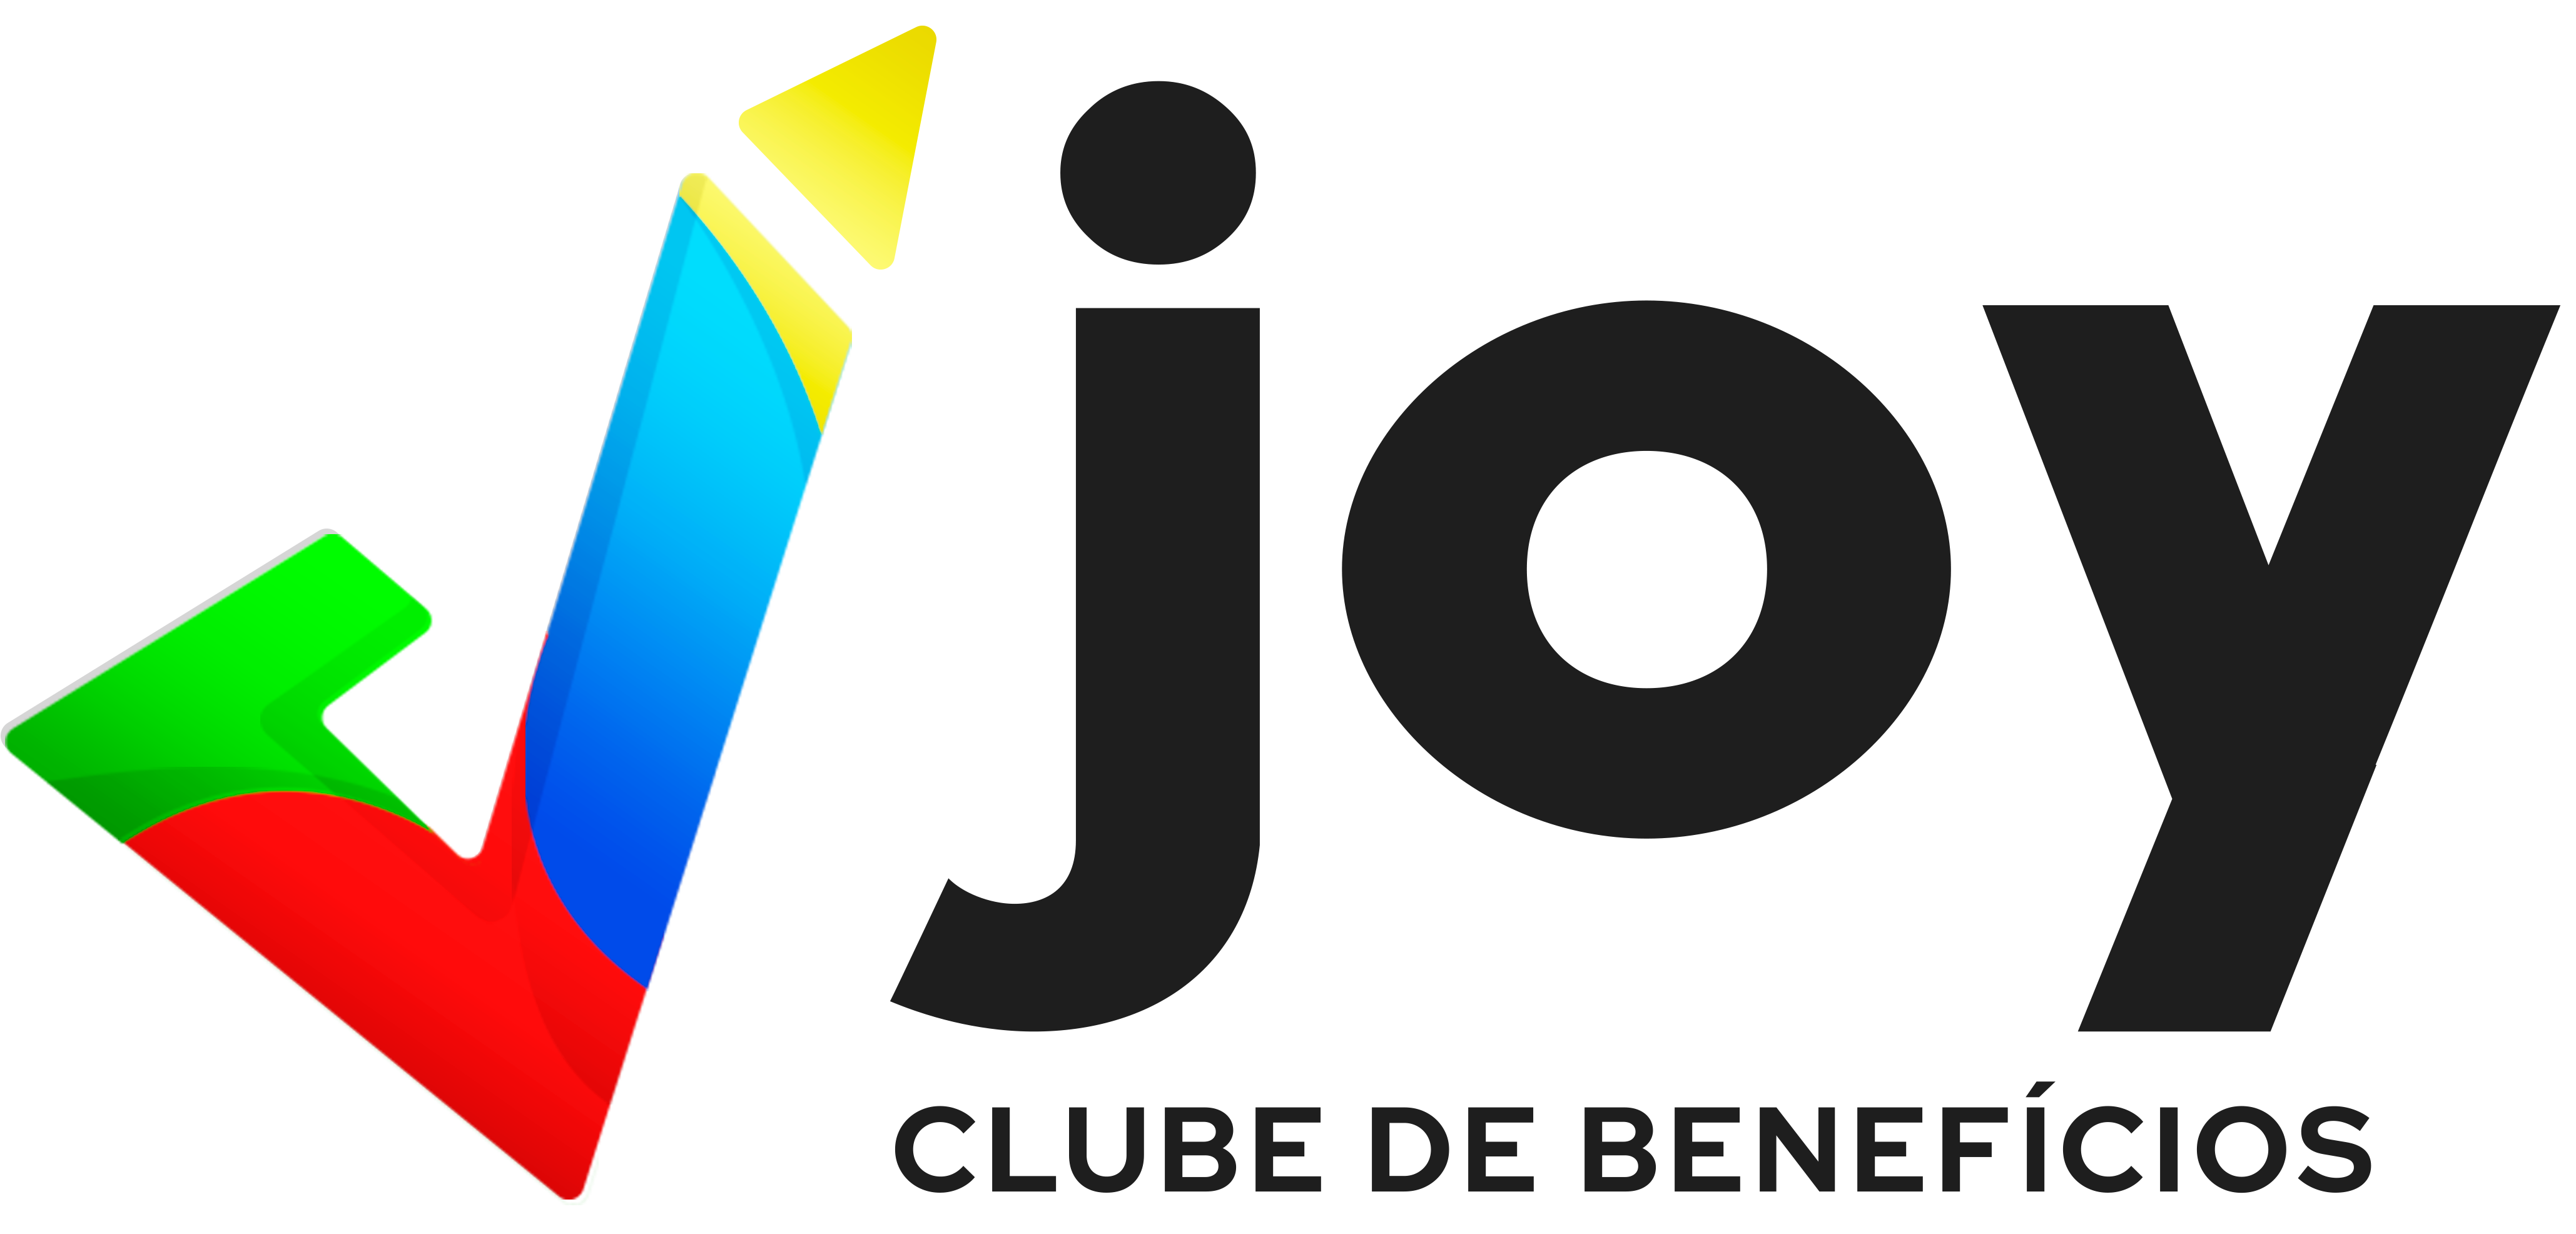 Joy Clube de Beneficios